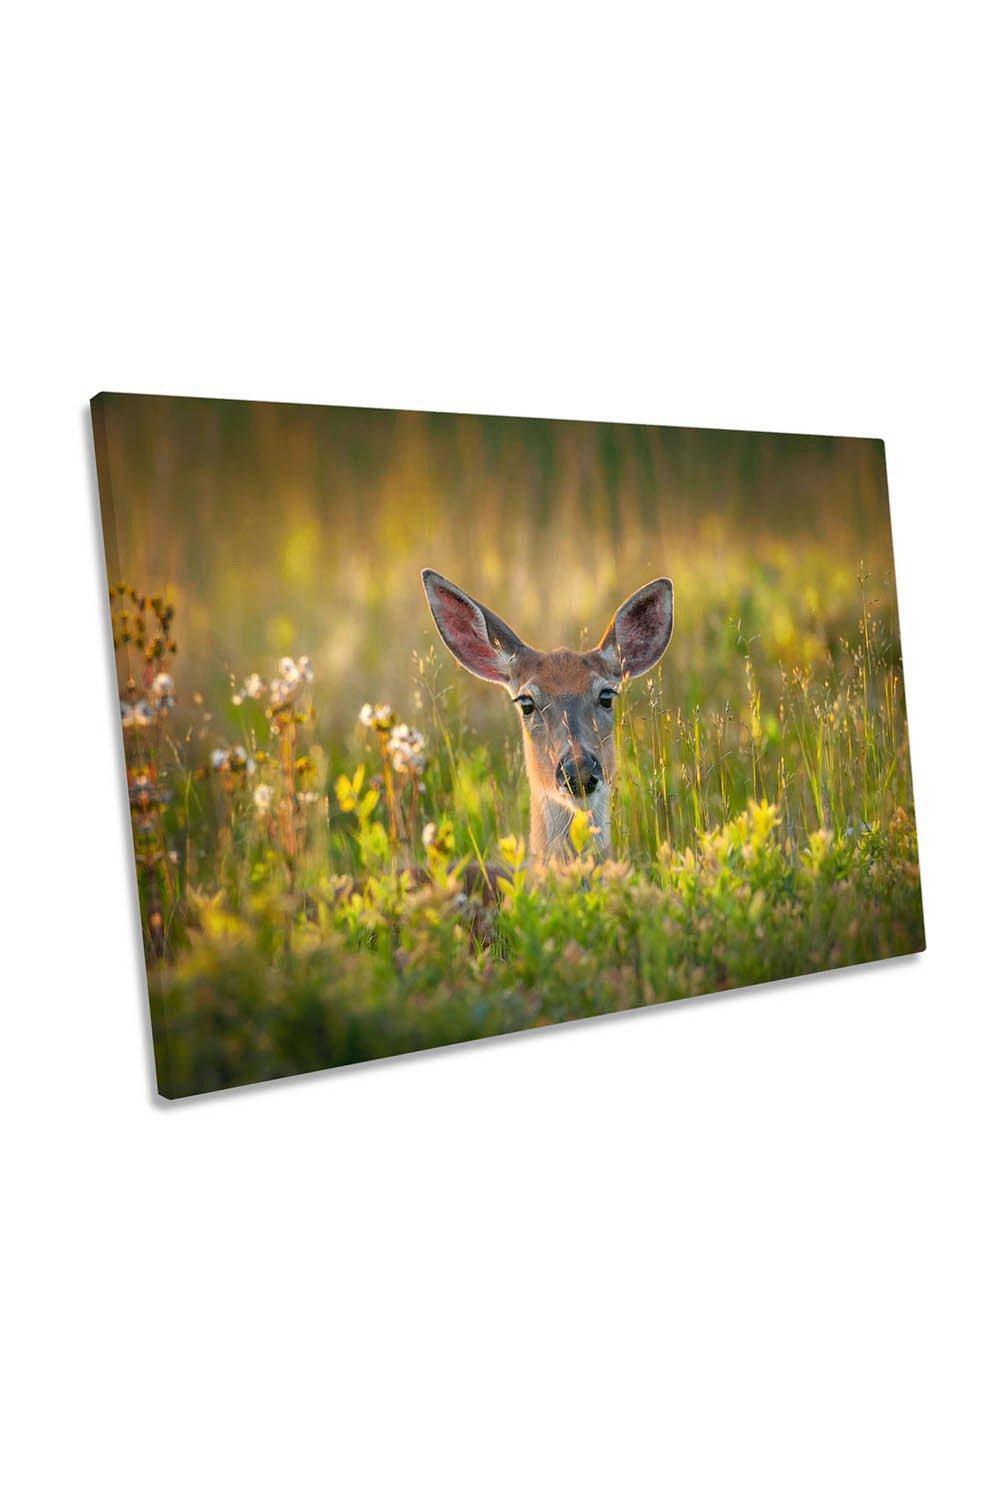 Looking Autumn Deer Wildlife Canvas Wall Art Picture Print